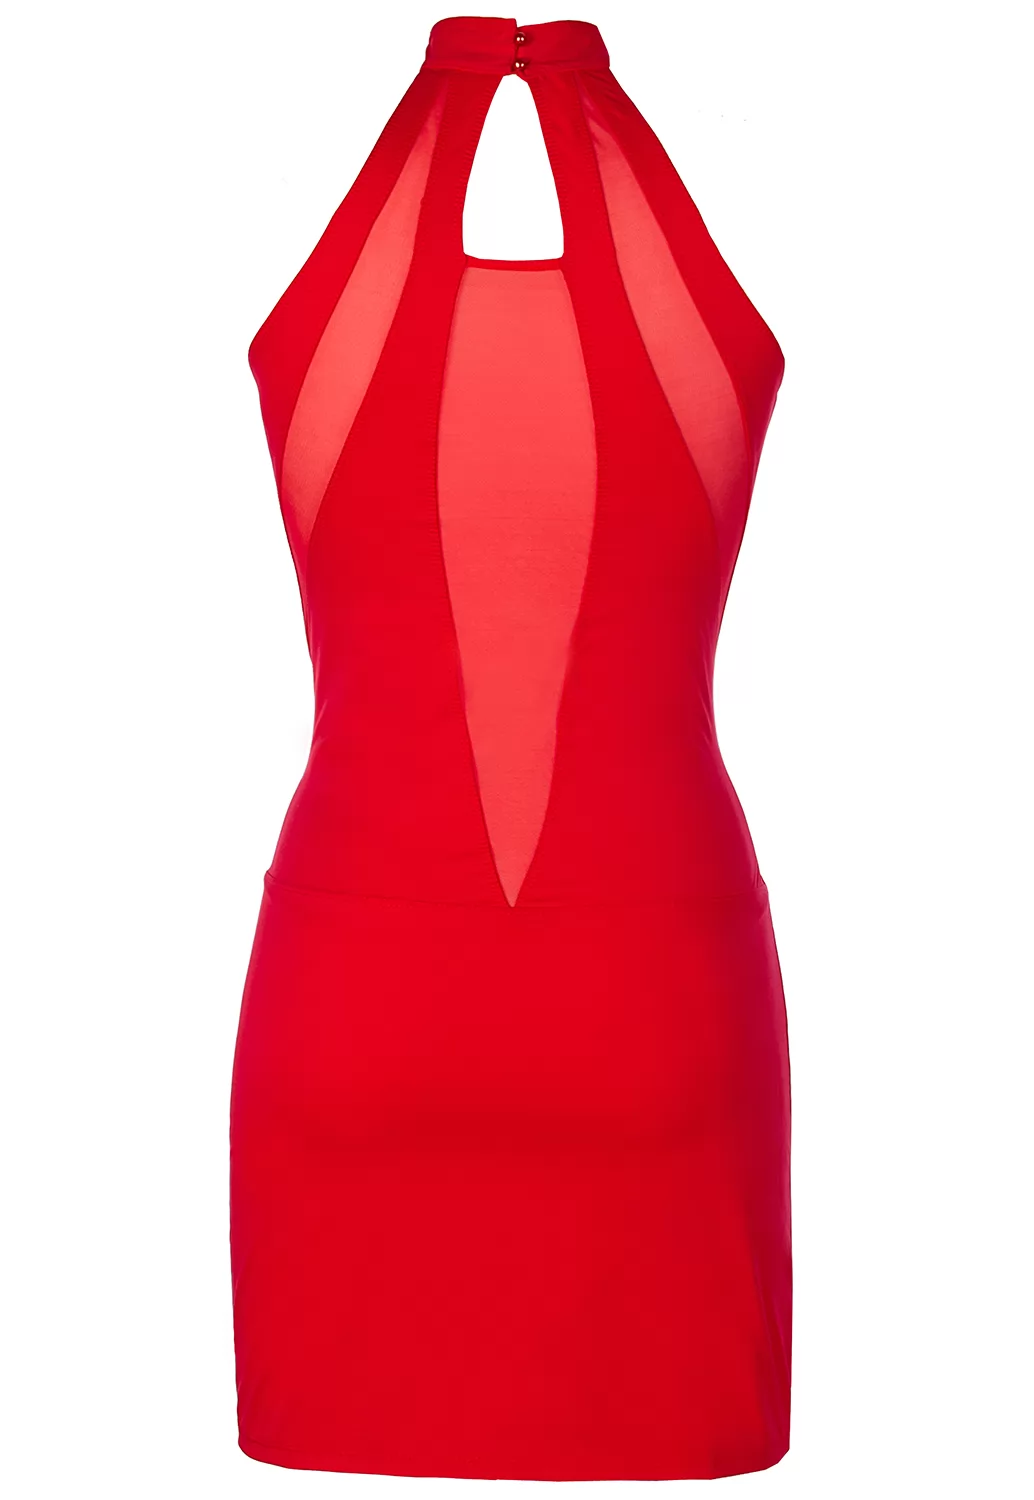 Sexy red dress with transparent neckline